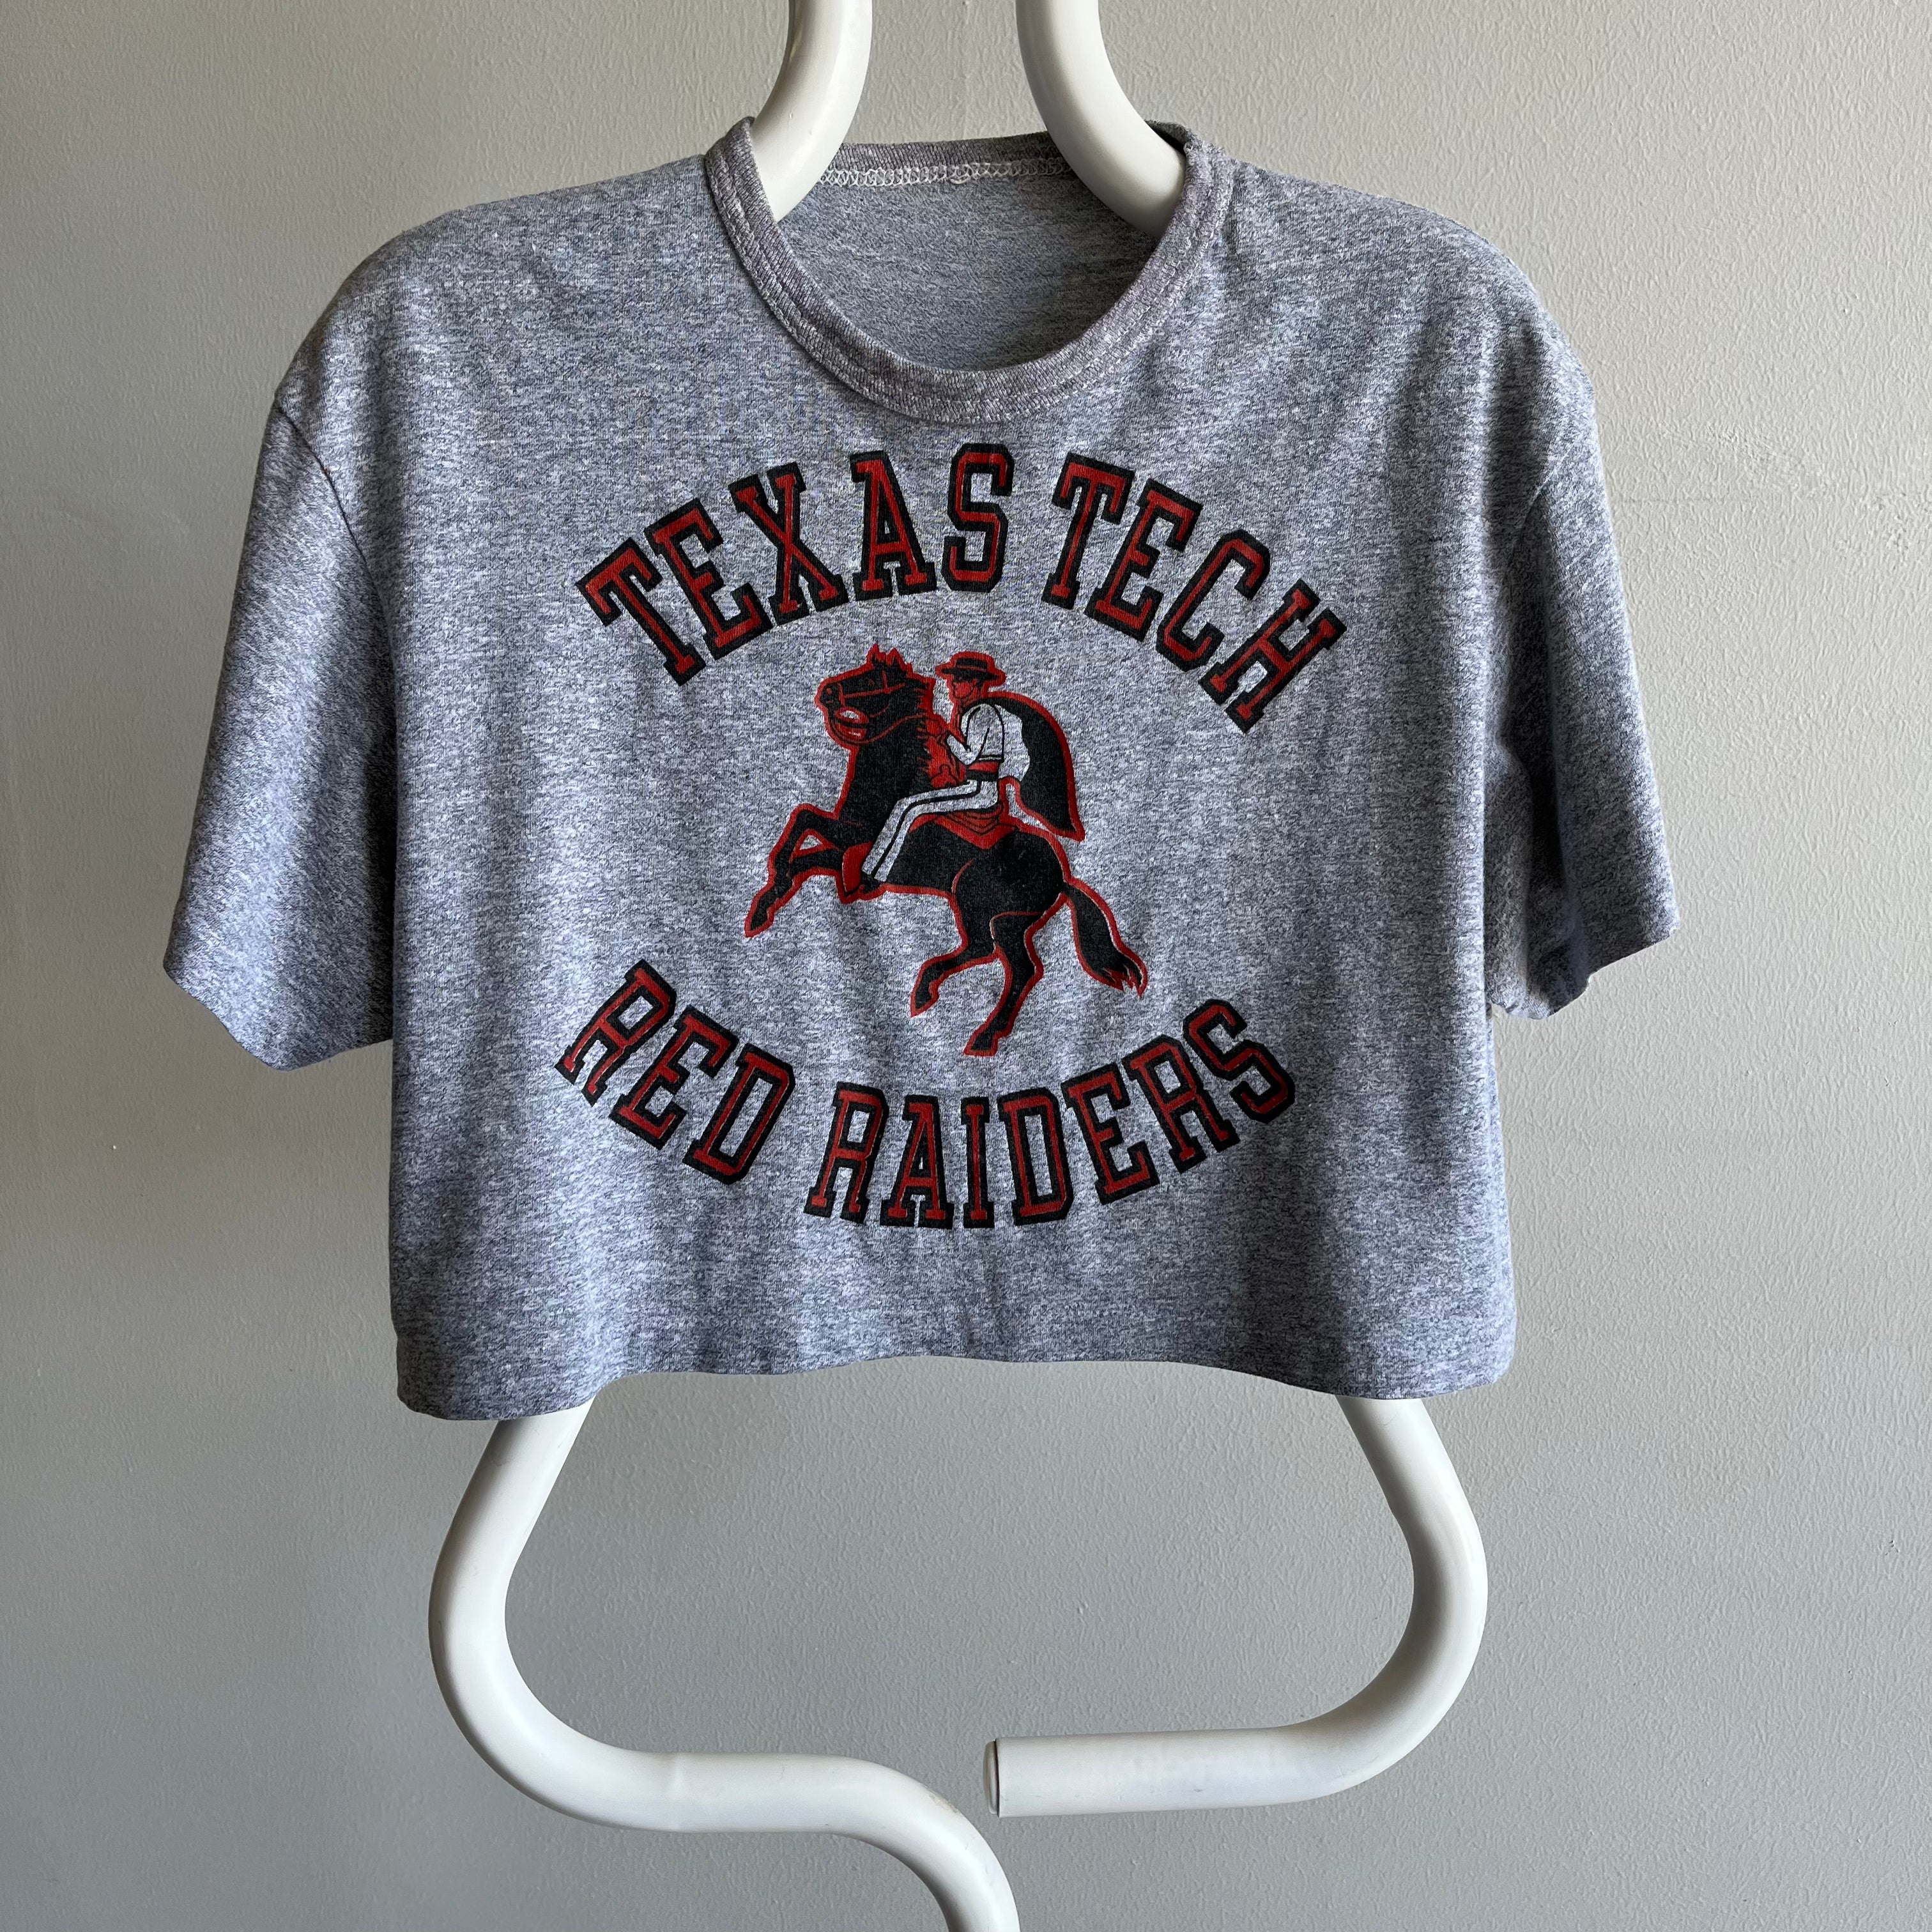 1970s Texas Tech Red Raiders Crop Top - Champion Brand